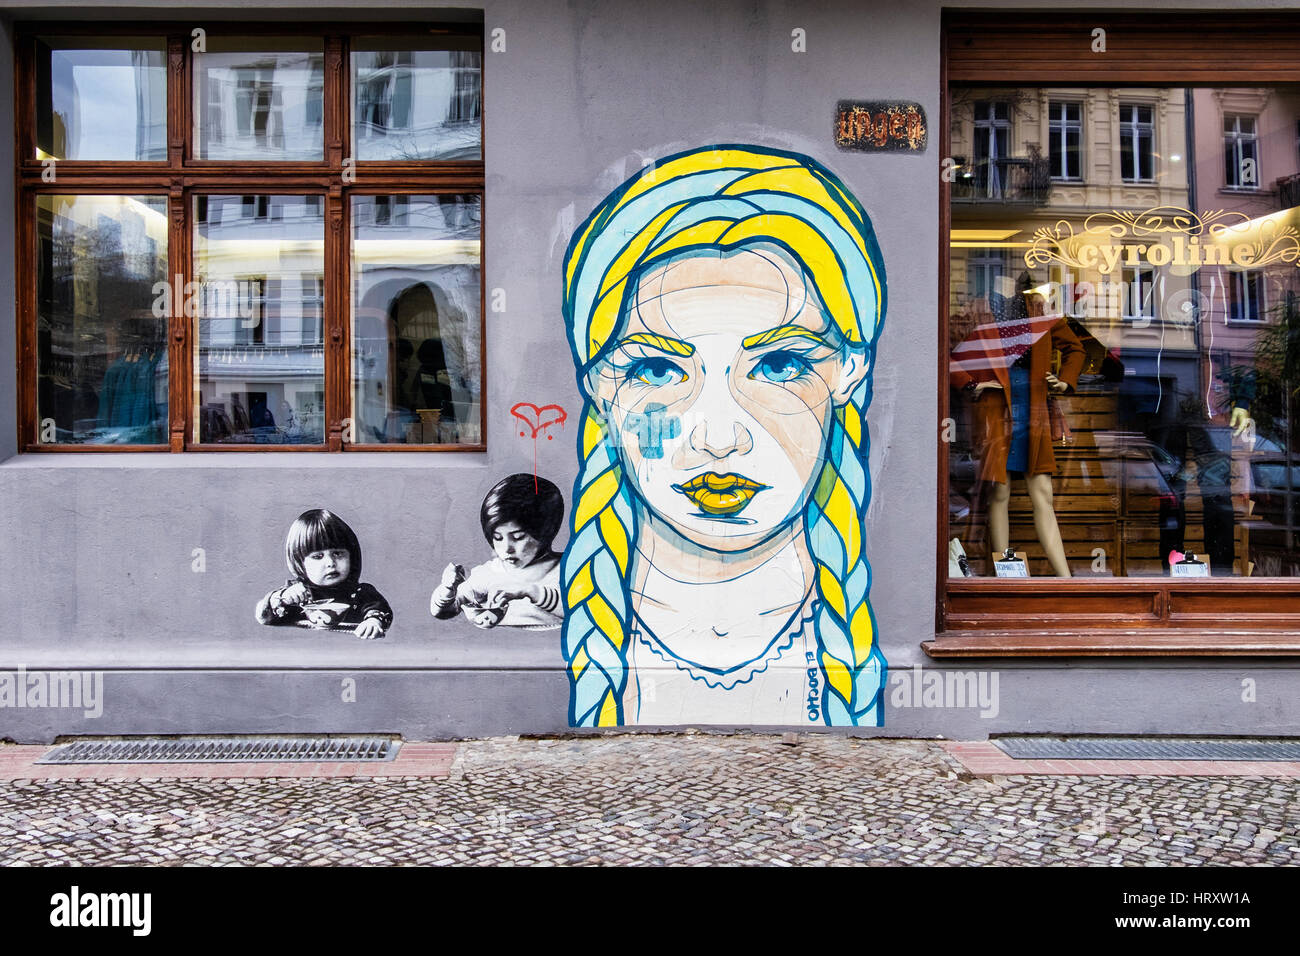 Berlin, Prenzlauer Berg. Street scene, Cyroline Upmarket clothing shop exterior and El Bocho street art Stock Photo